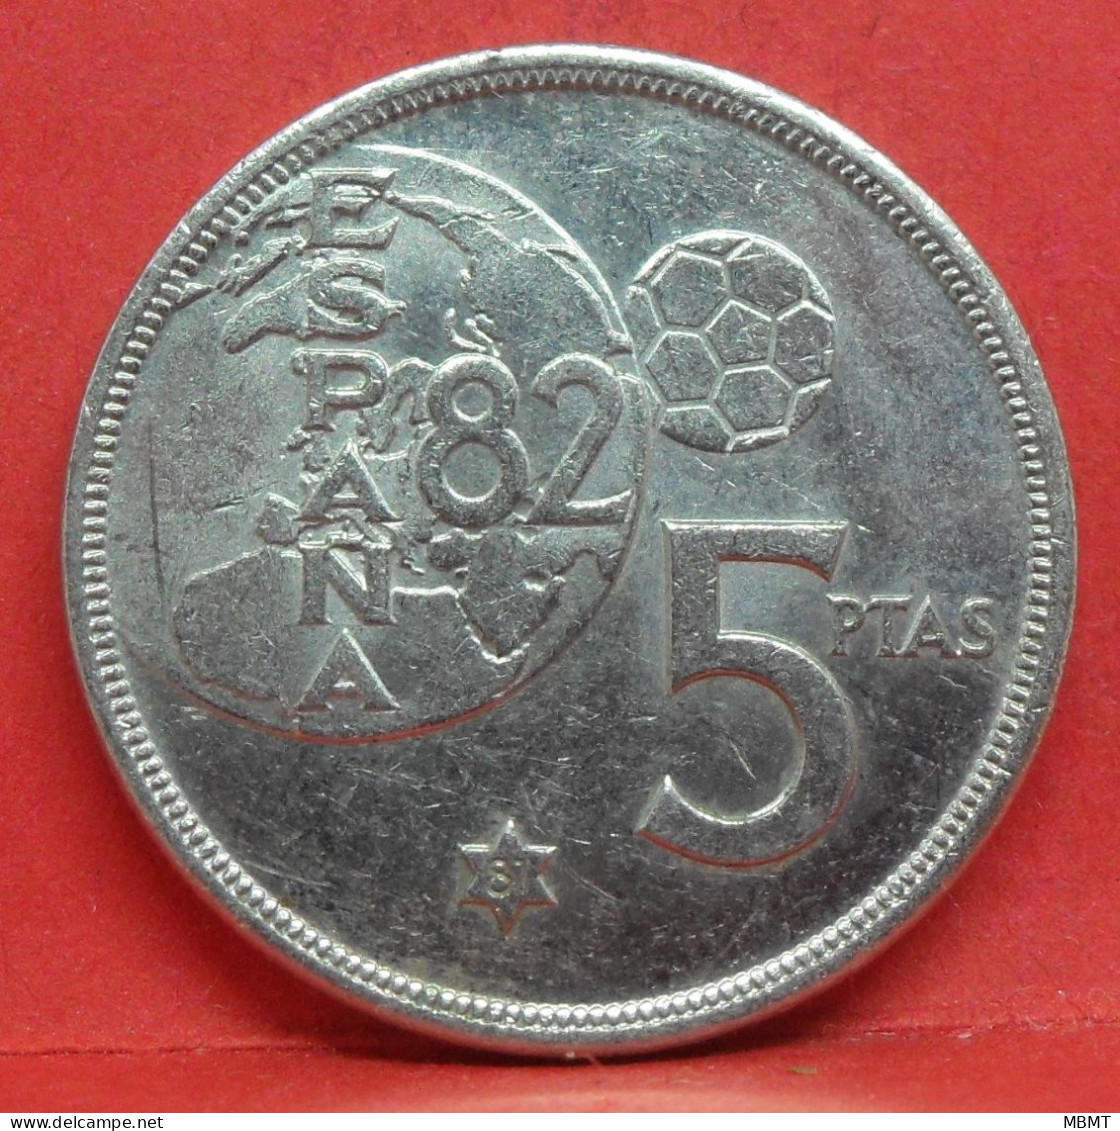 5 Pesetas 1980 étoile 81 - TTB - Pièce Monnaie Espagne - Article N°2381 - 5 Pesetas